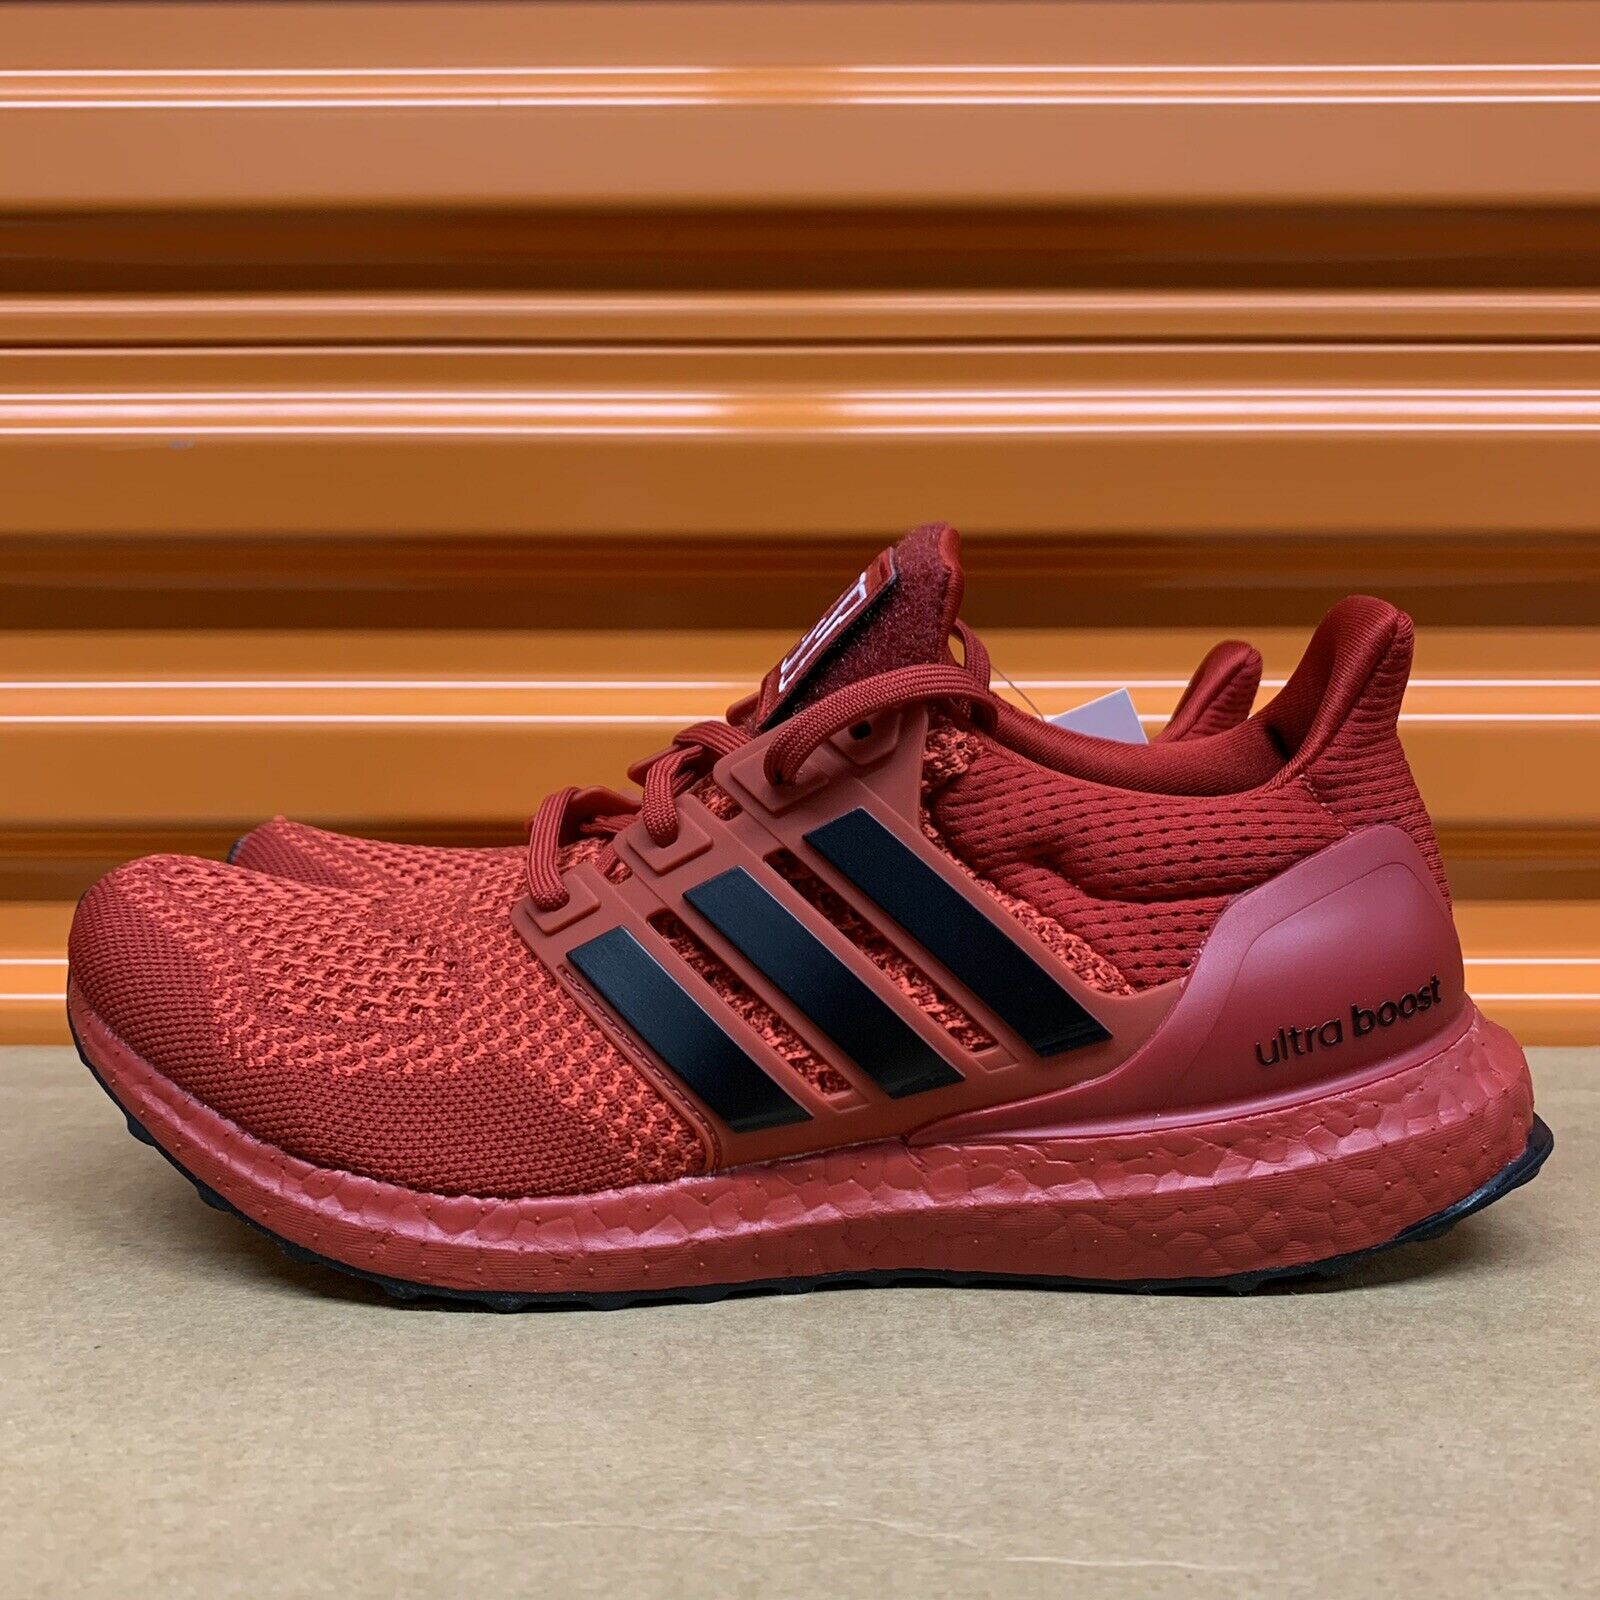 Adidas Ultraboost 1.0 Nebraska NCAA Pack Red/Black Men’s Shoes Sz 8.5 (FY5806)